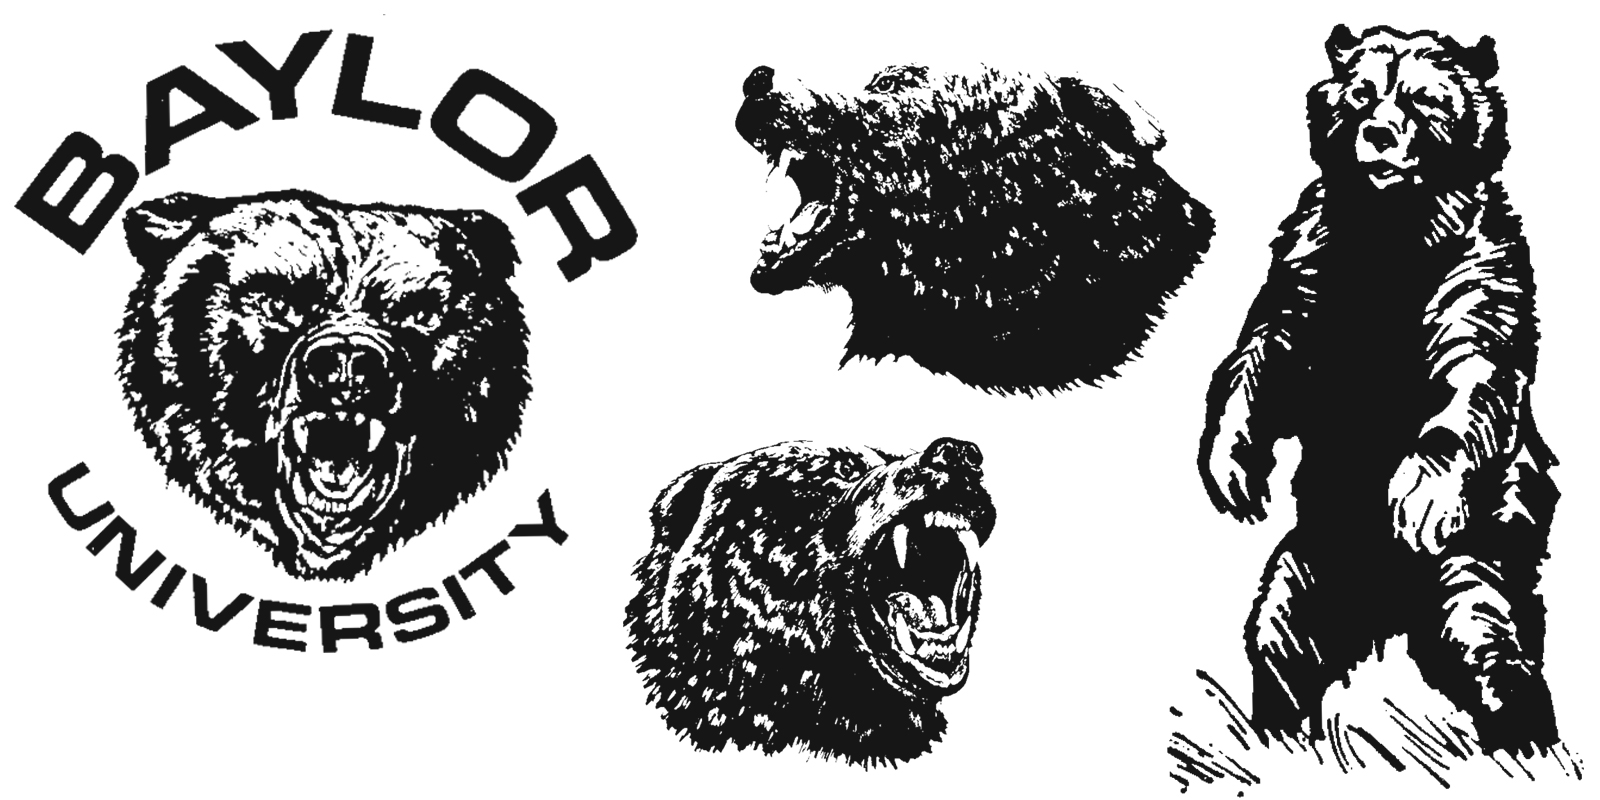 Late 1960s "Growling Bear" Baylor logo variants